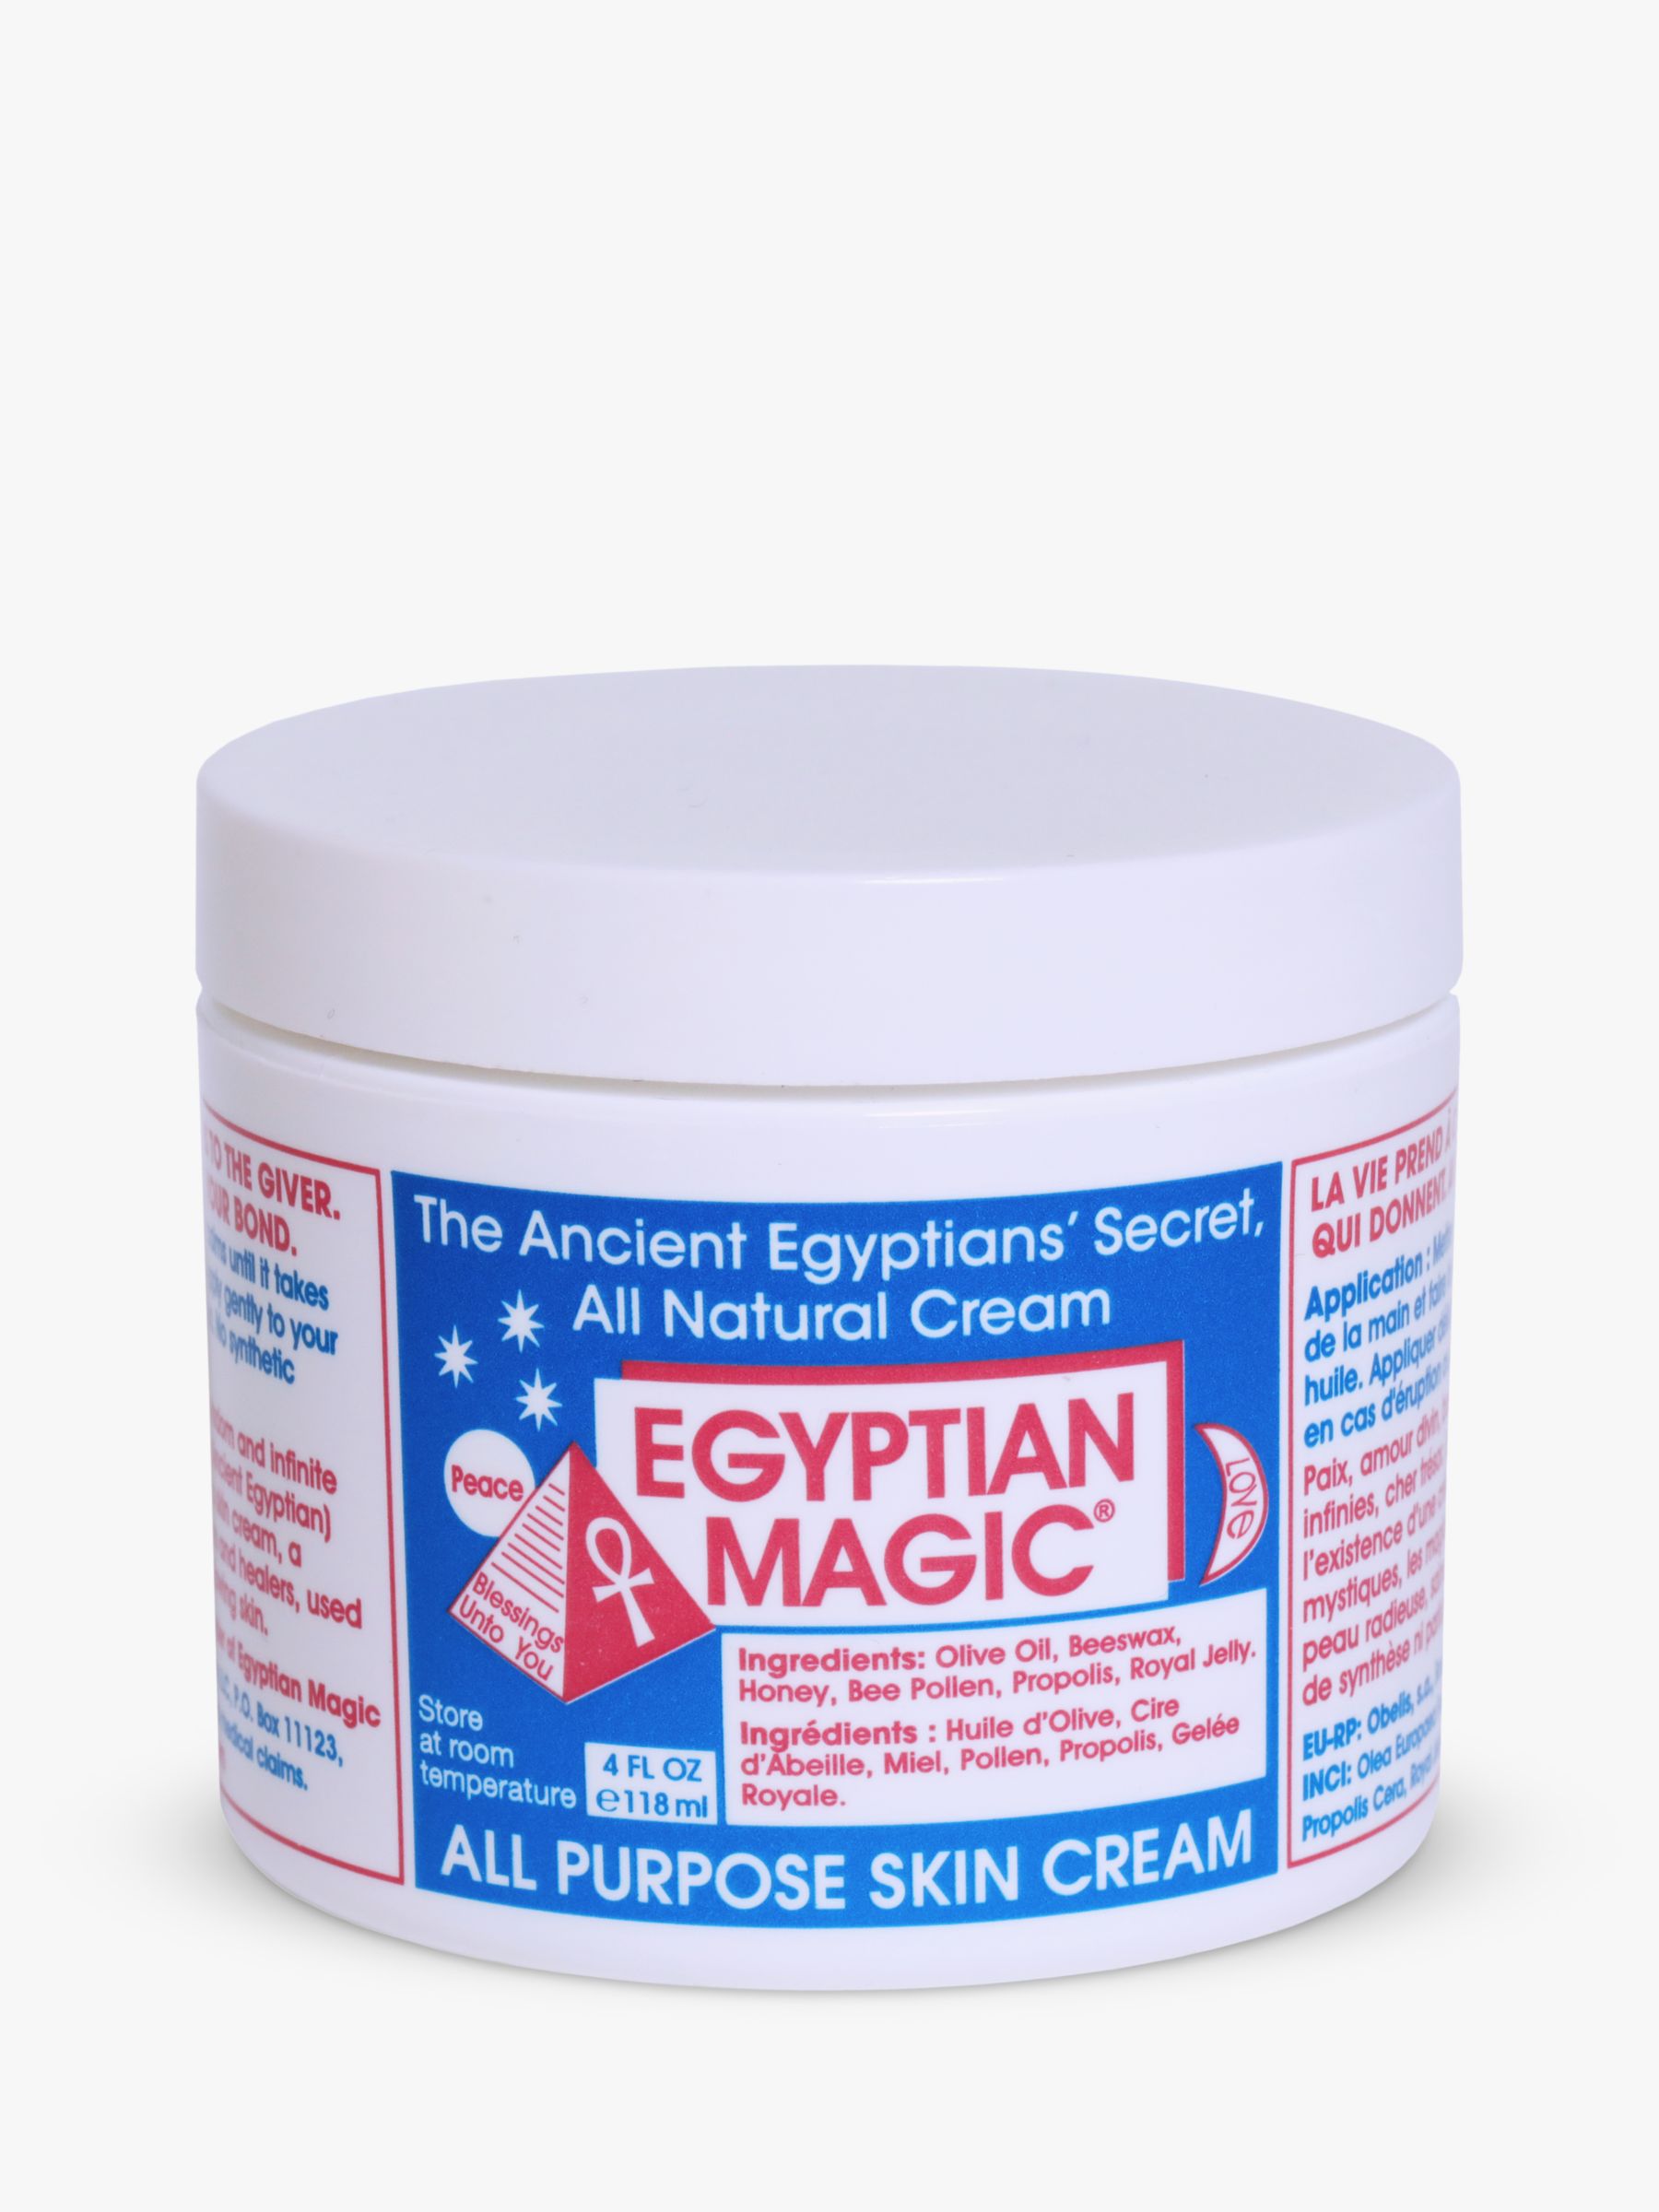 Egyptian Magic All Purpose Skin Cream 118ml At John Lewis And Partners